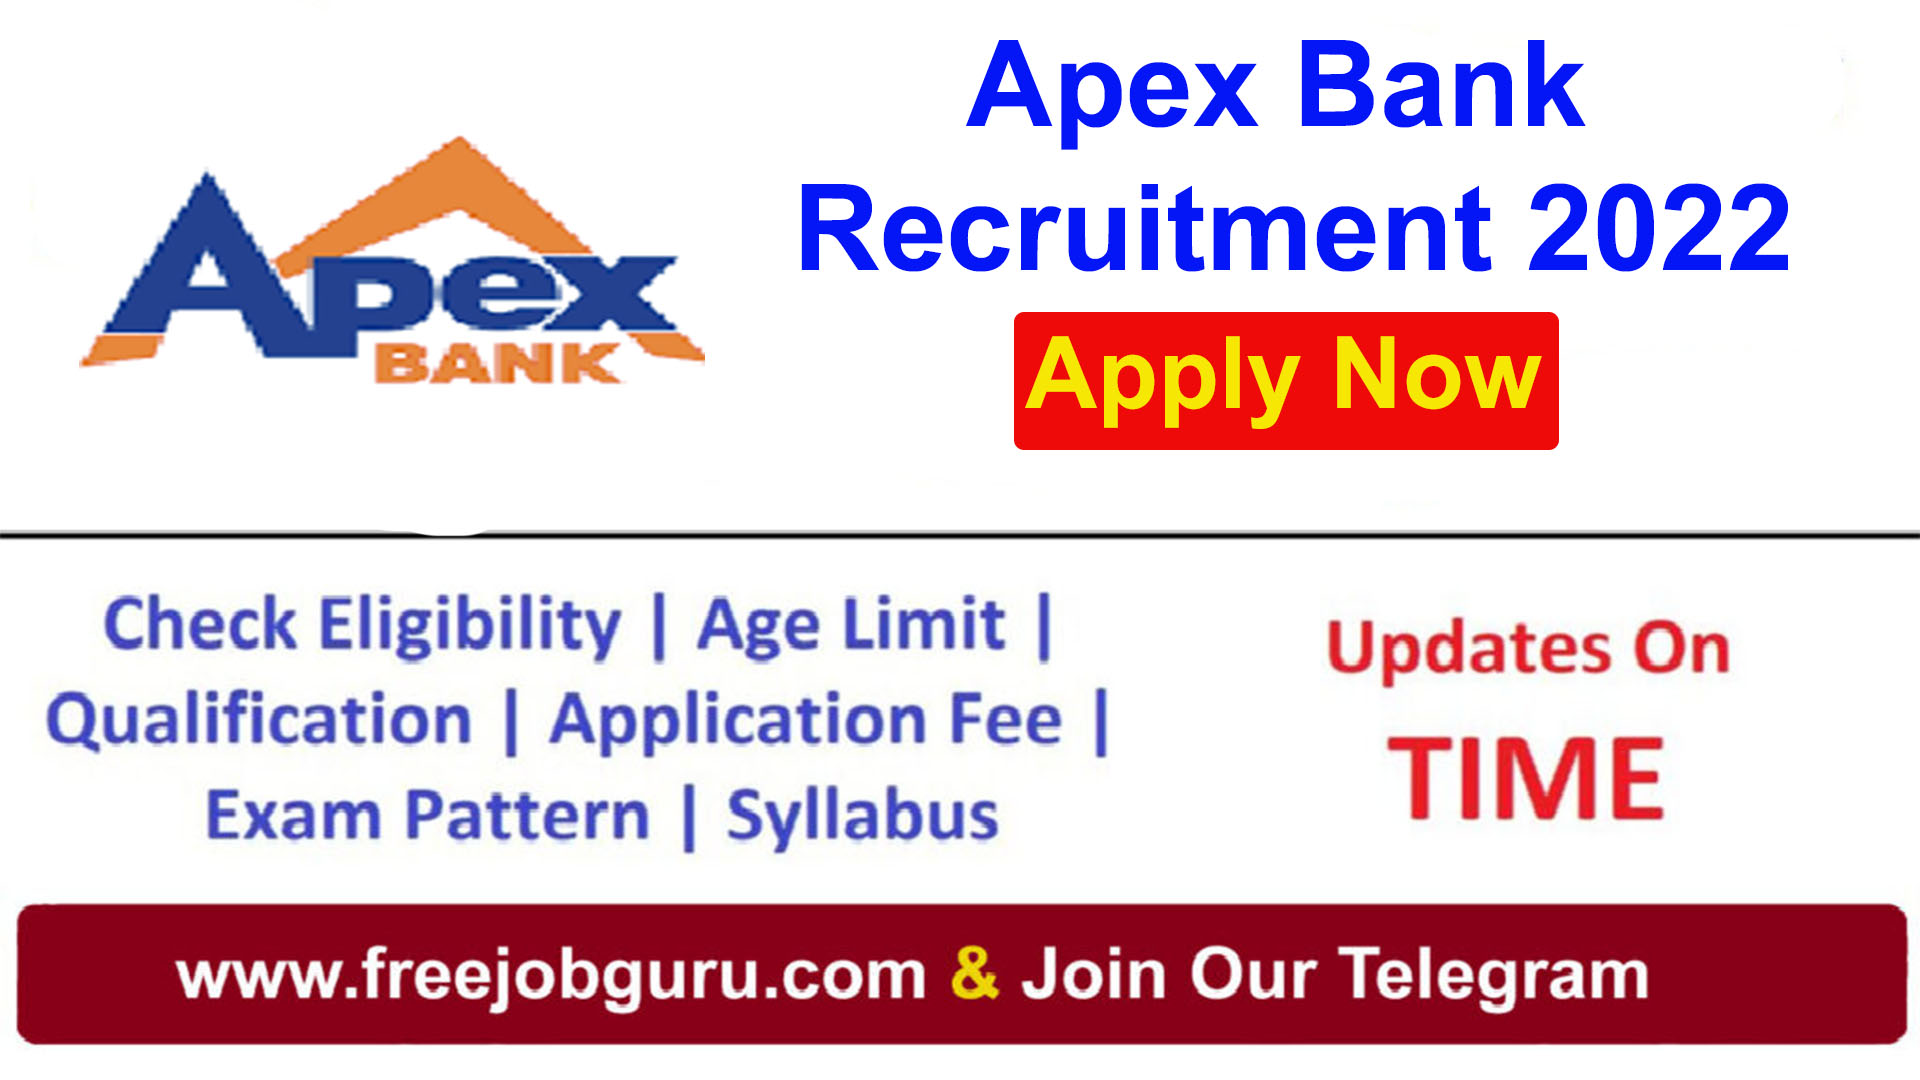 Apex Bank Recruitment 2022